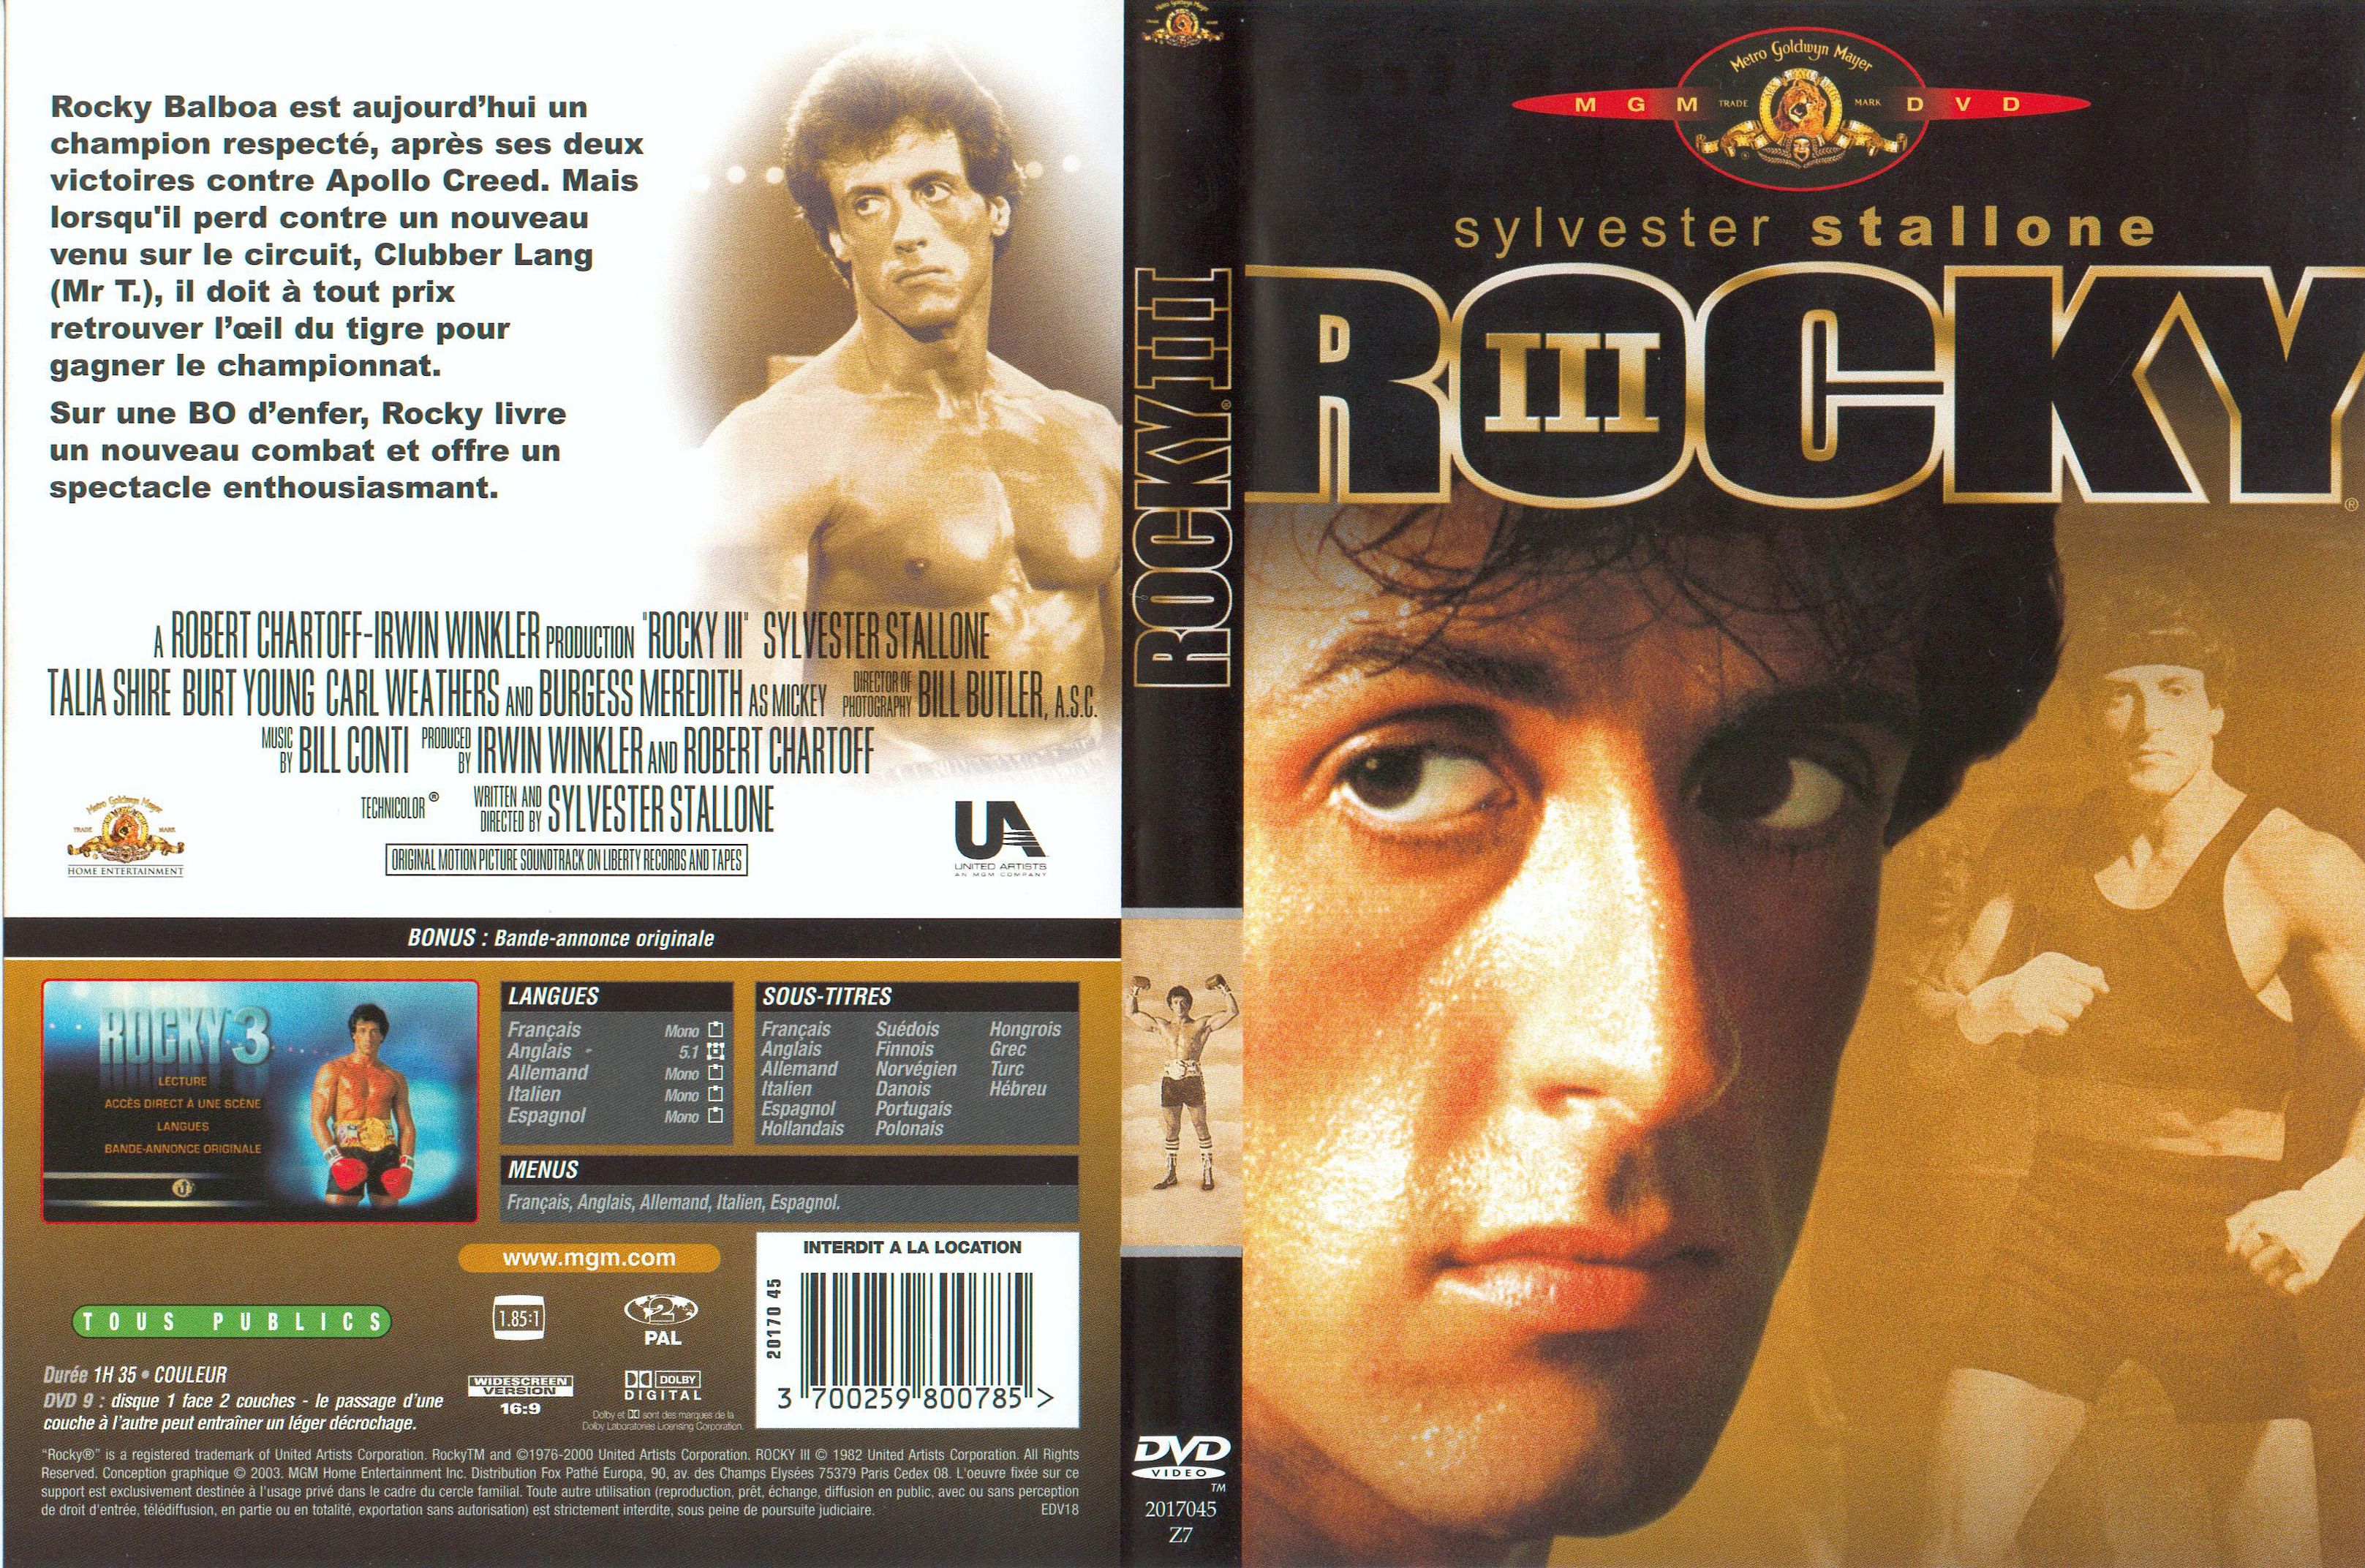 Jaquette DVD Rocky 3